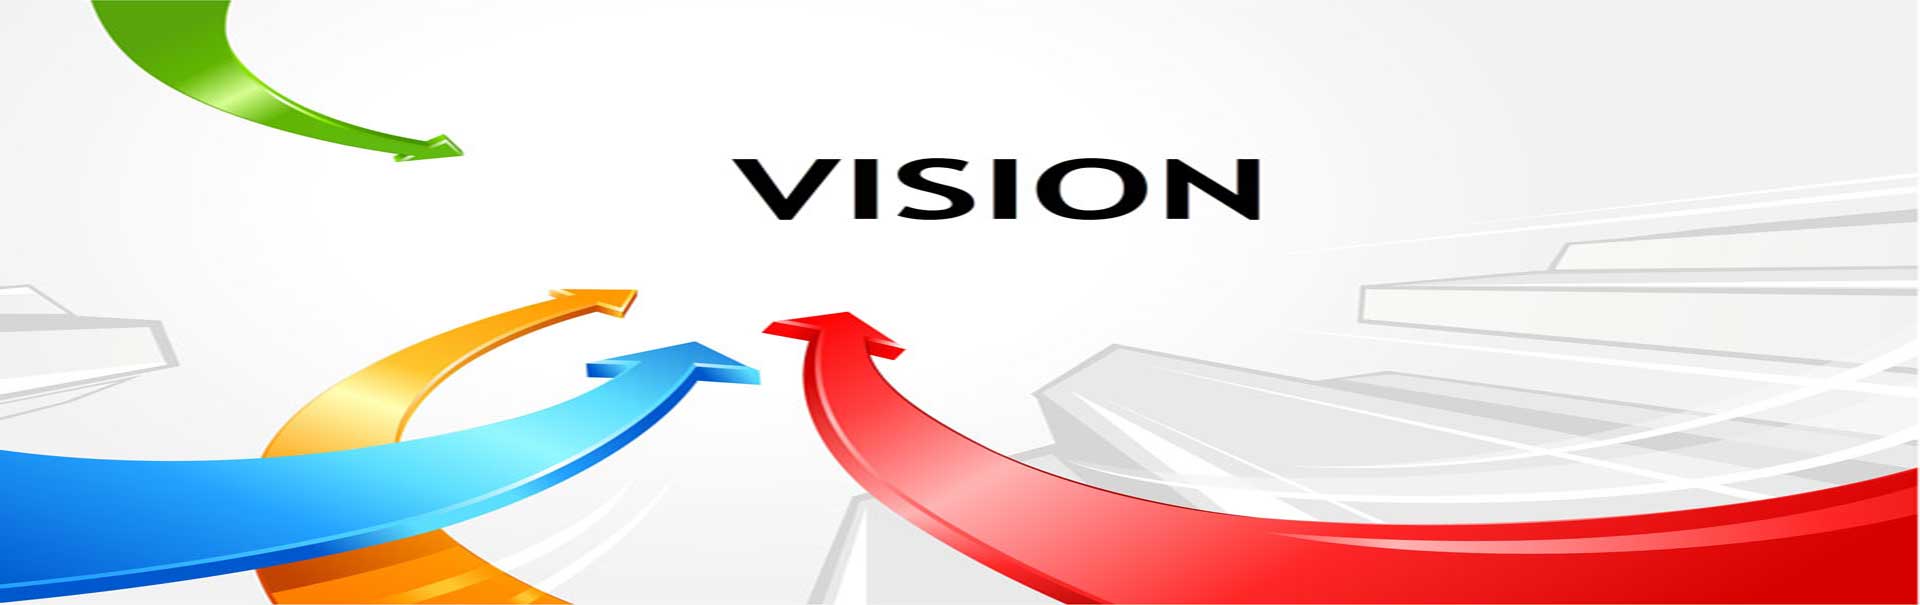 vision2